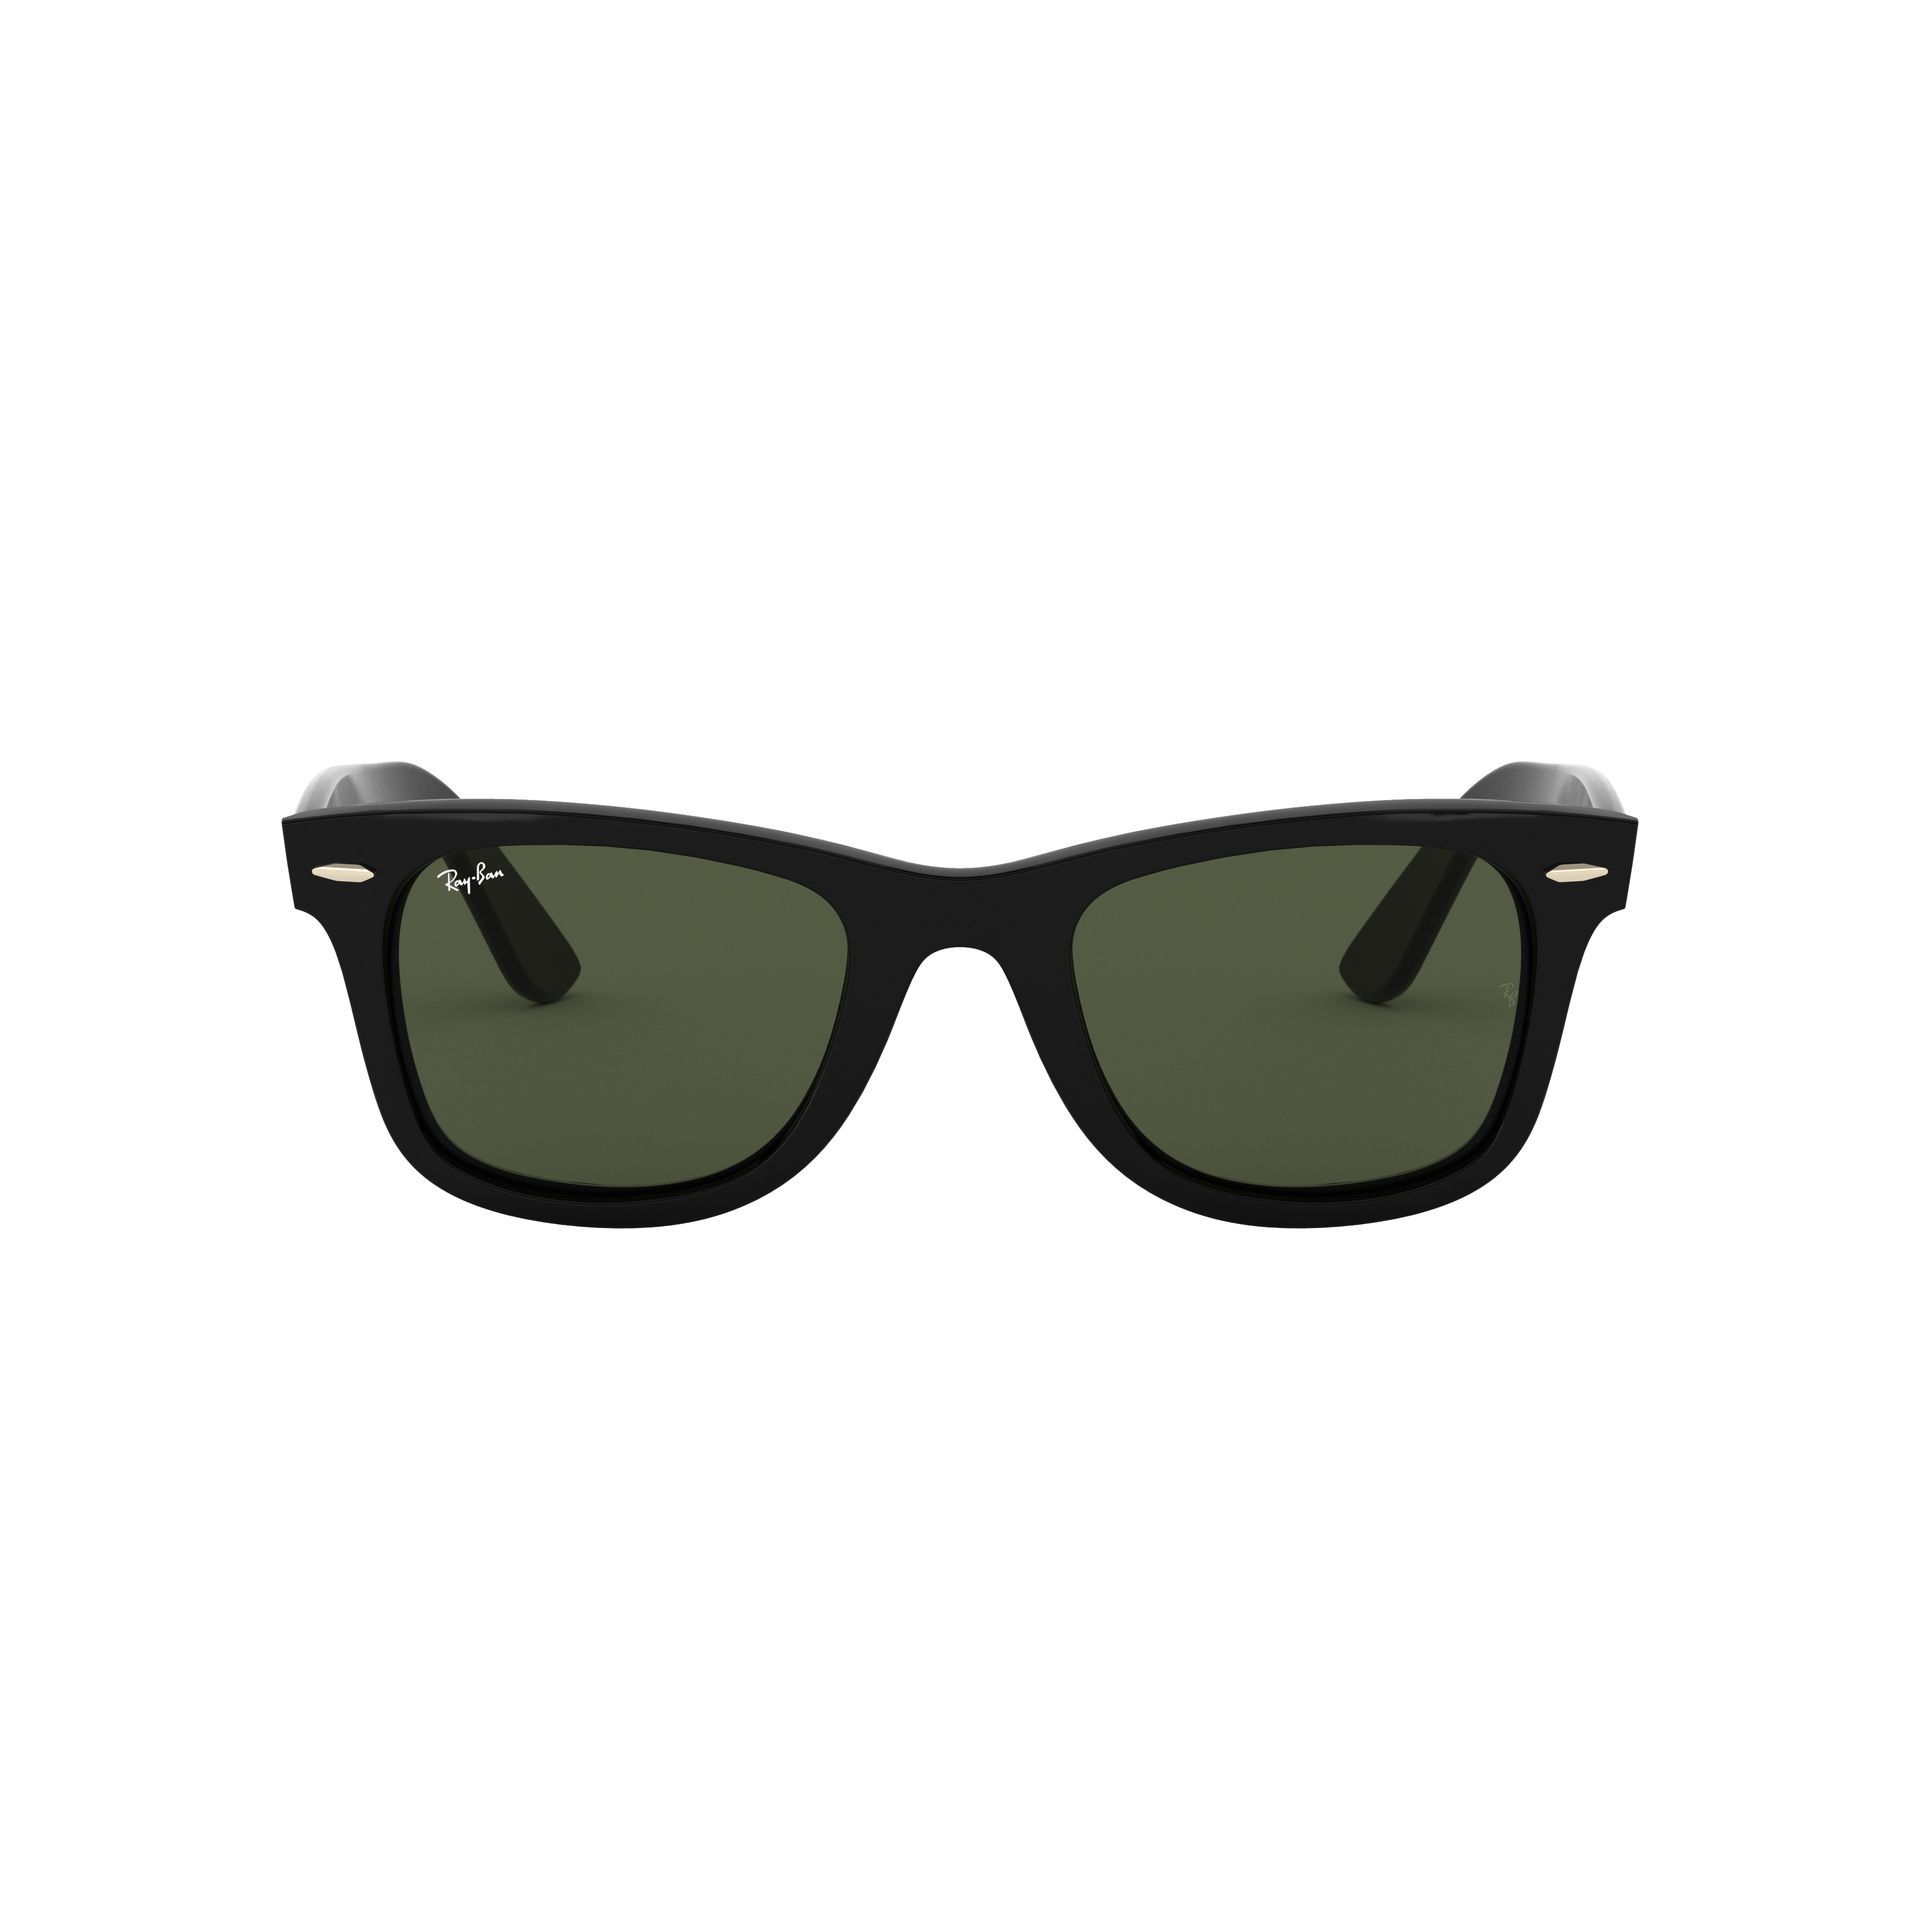 0RB4340 Wayfarer Sunglasses 601 00 - size 50